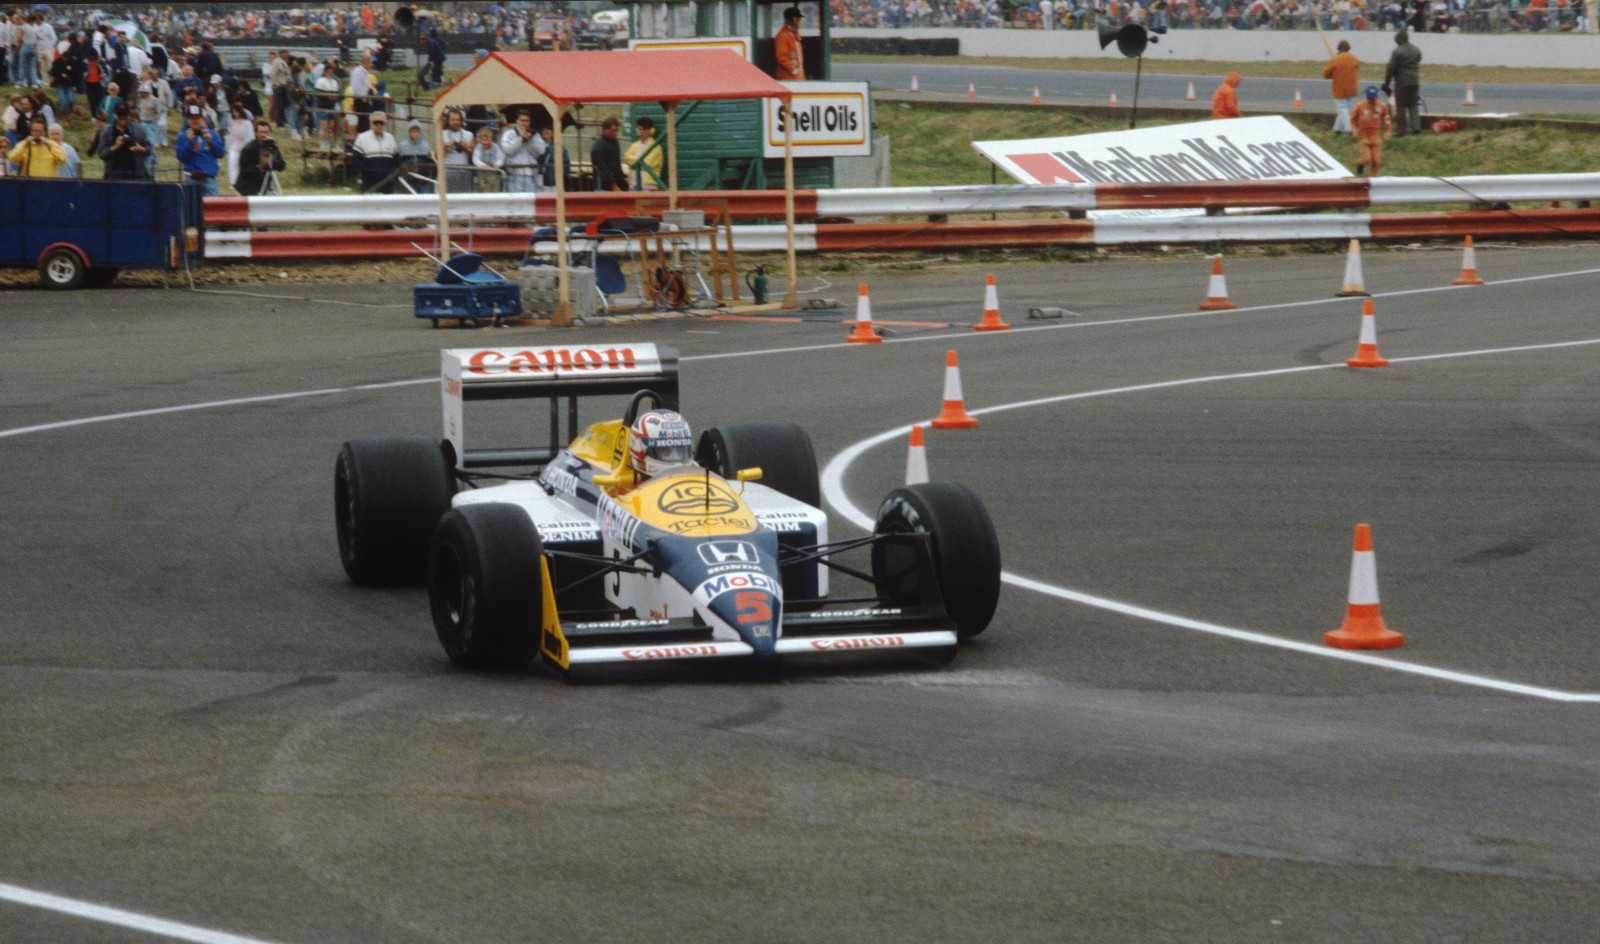 Williams' Nigel Mansell at the 1987 British Grand Prix. Silverstone, July 1987.